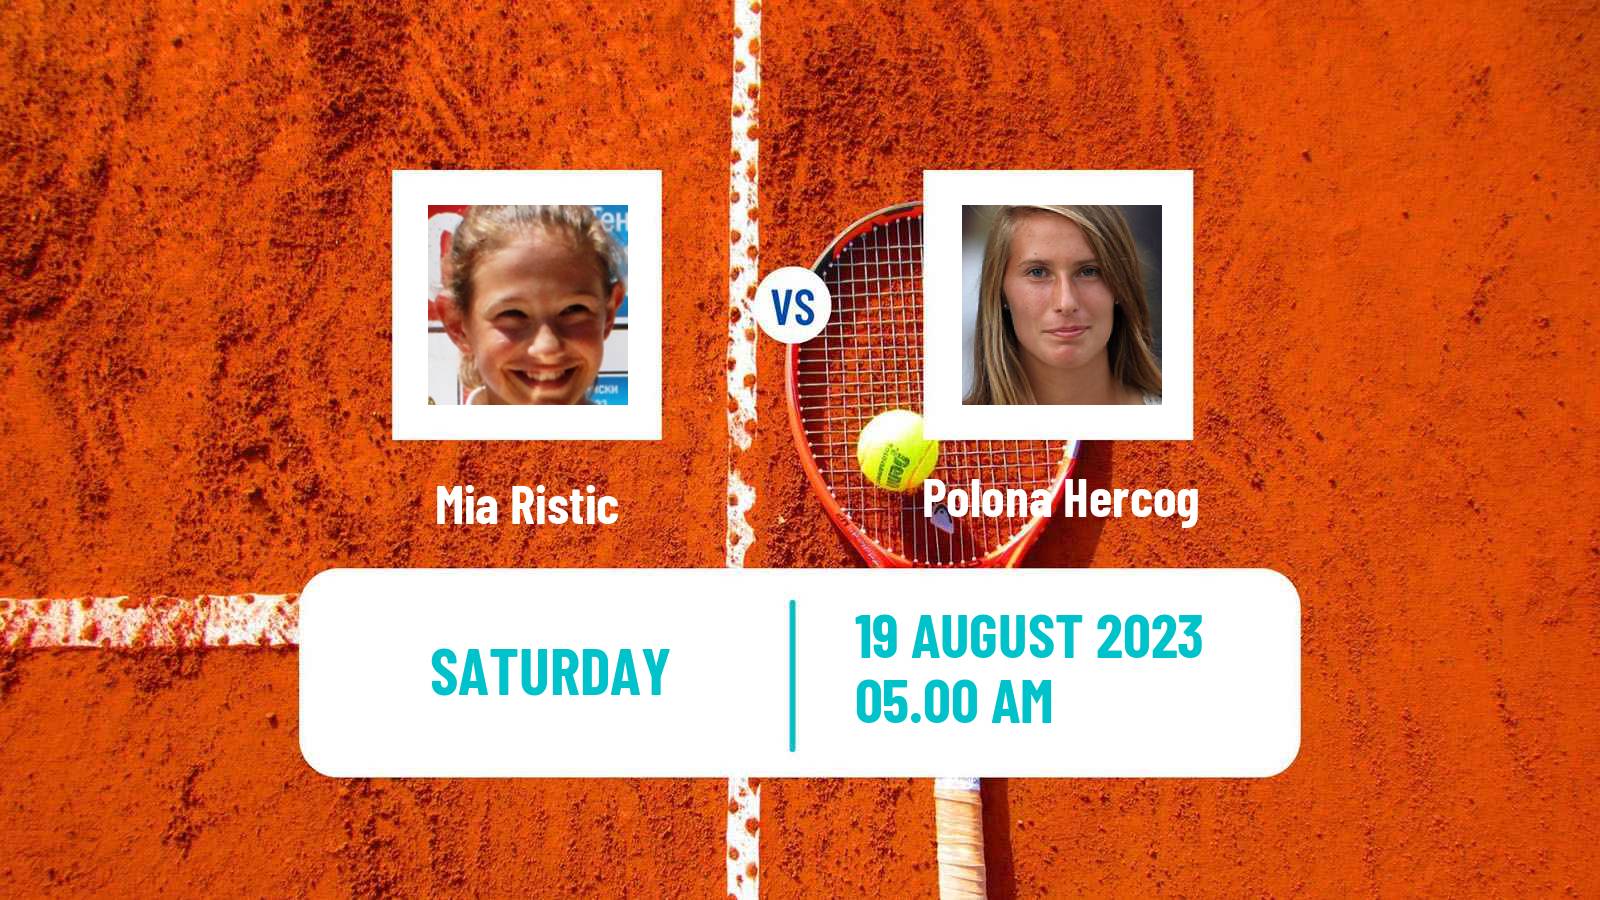 Tennis ITF W25 Vrnjacka Banja Women Mia Ristic - Polona Hercog